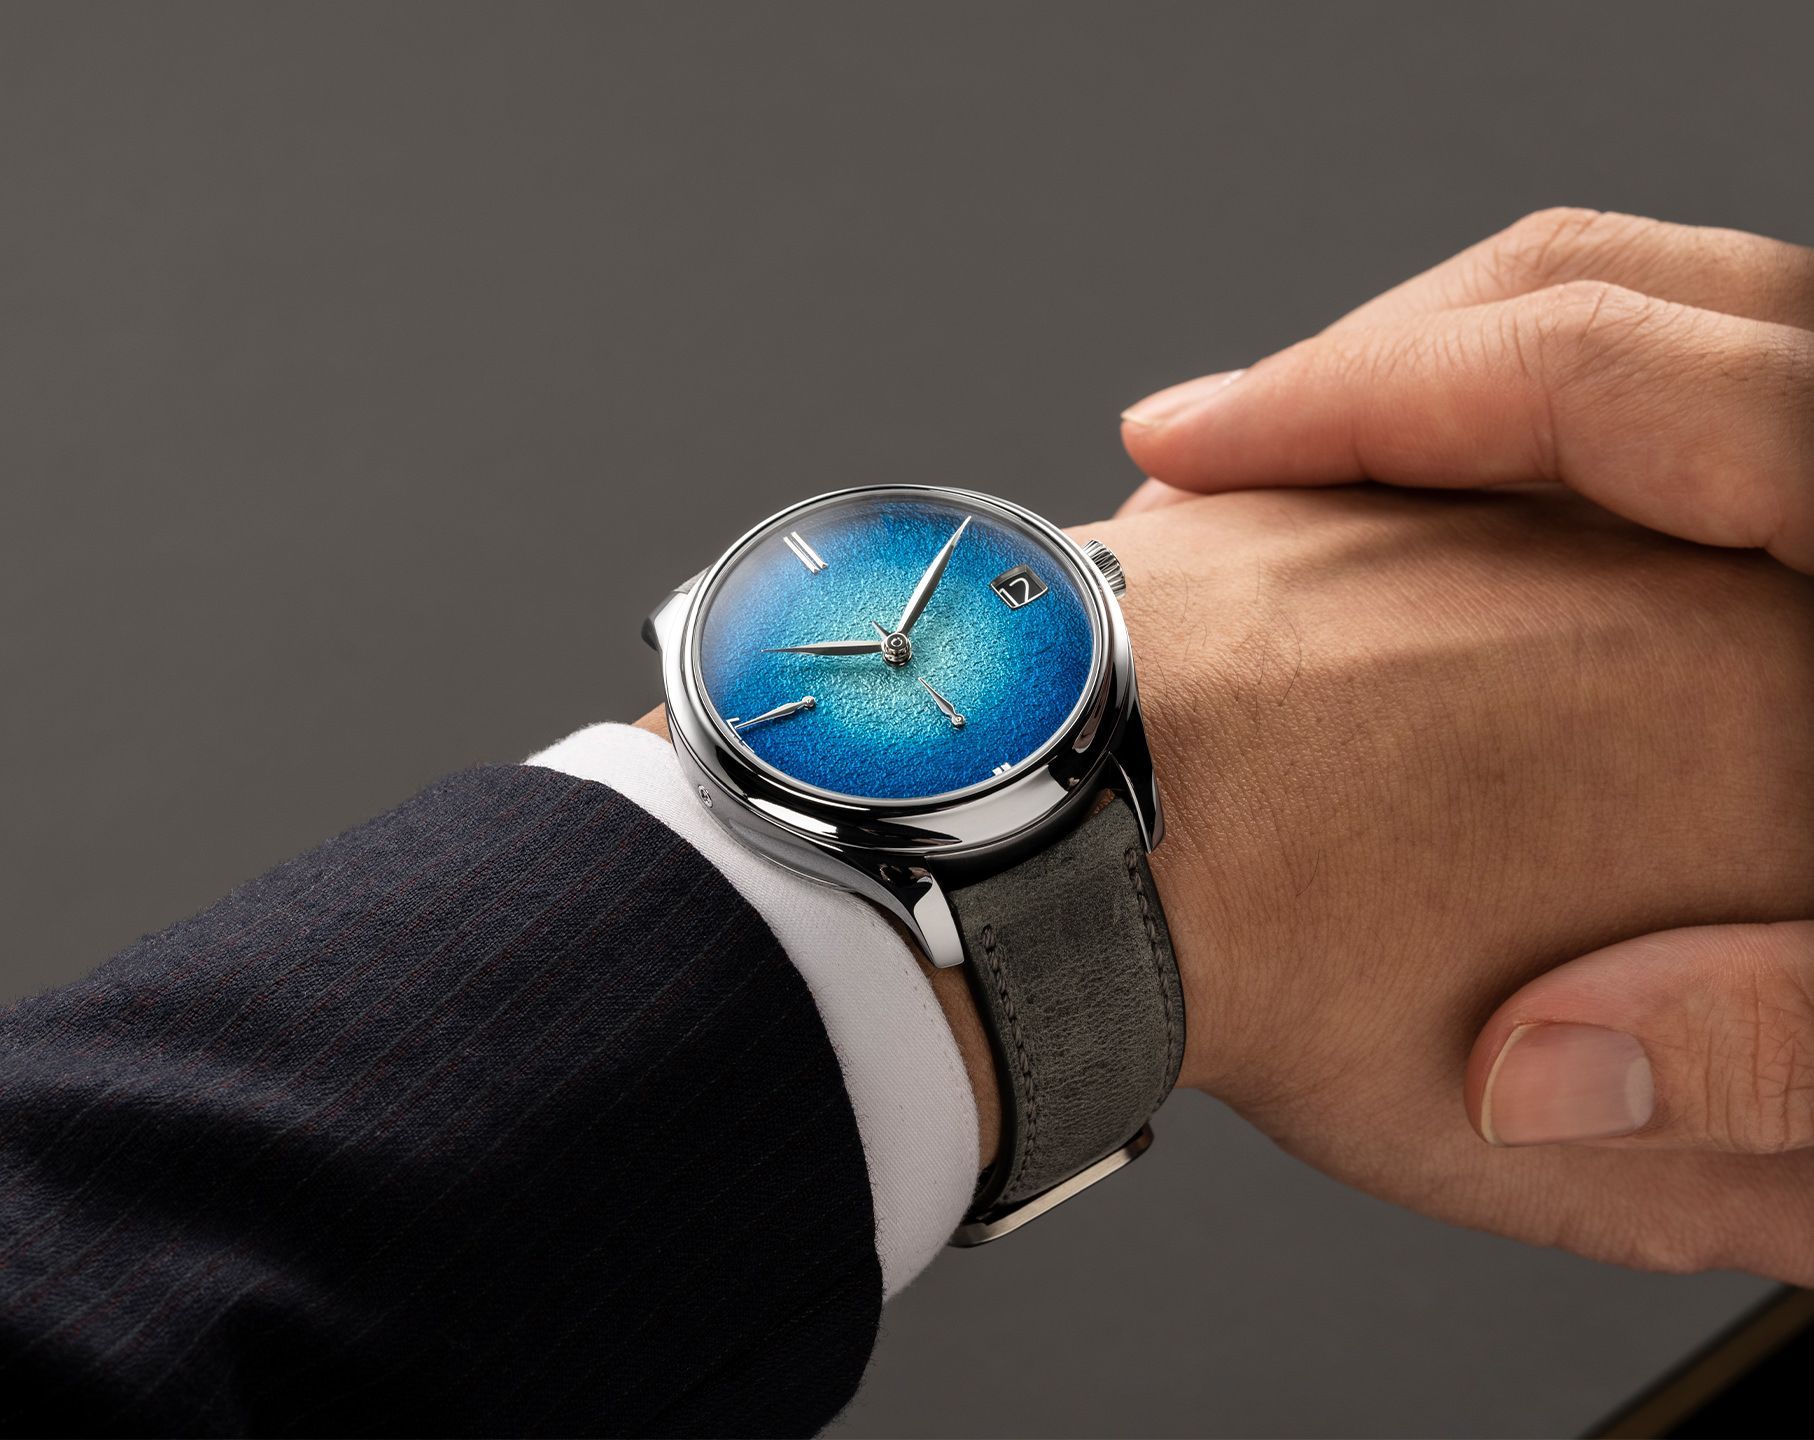 H. Moser & Cie. Perpetual Calendar 42 mm Watch in Blue Dial For Men - 6